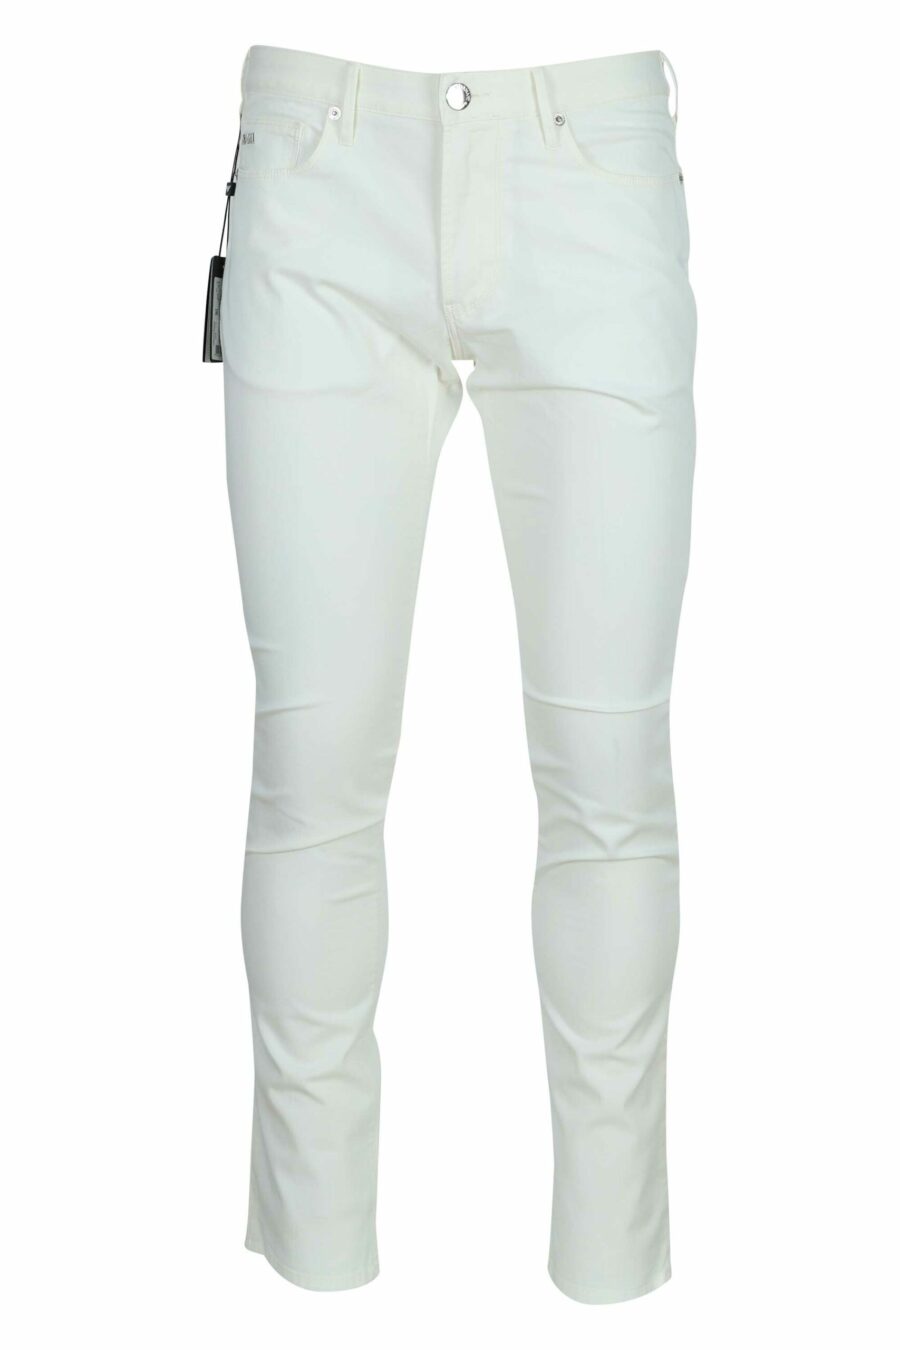 White jeans with metal eagle mini logo - 8056861951946 scaled